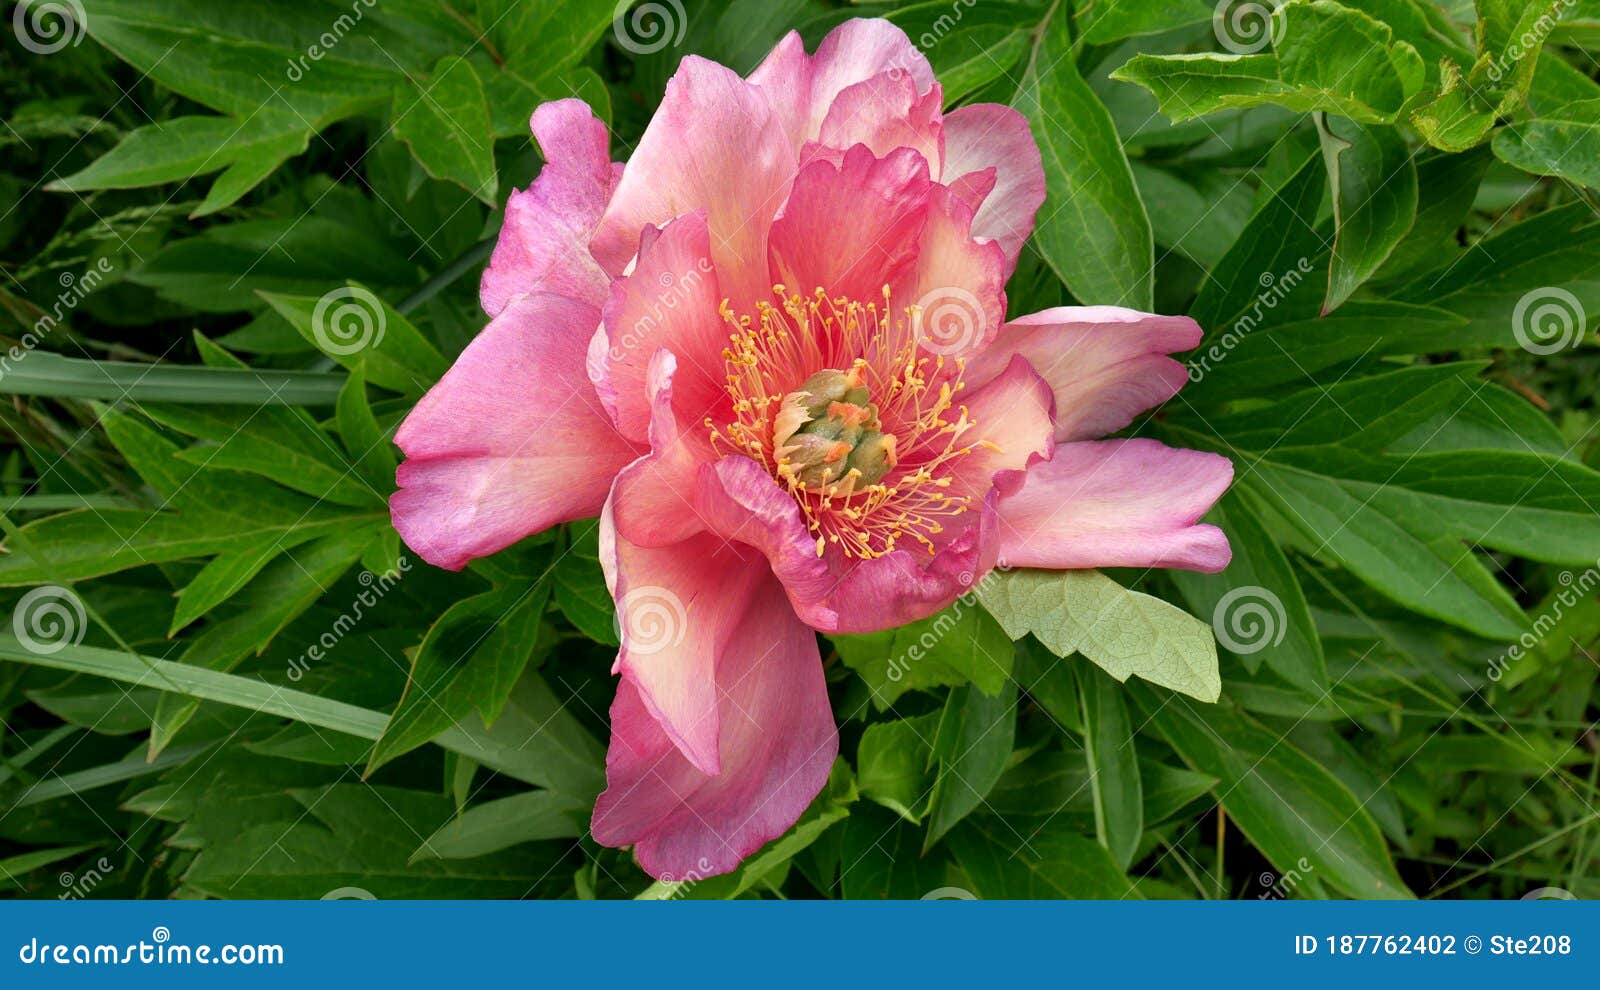 peony ito hybrid cultivar julia rose